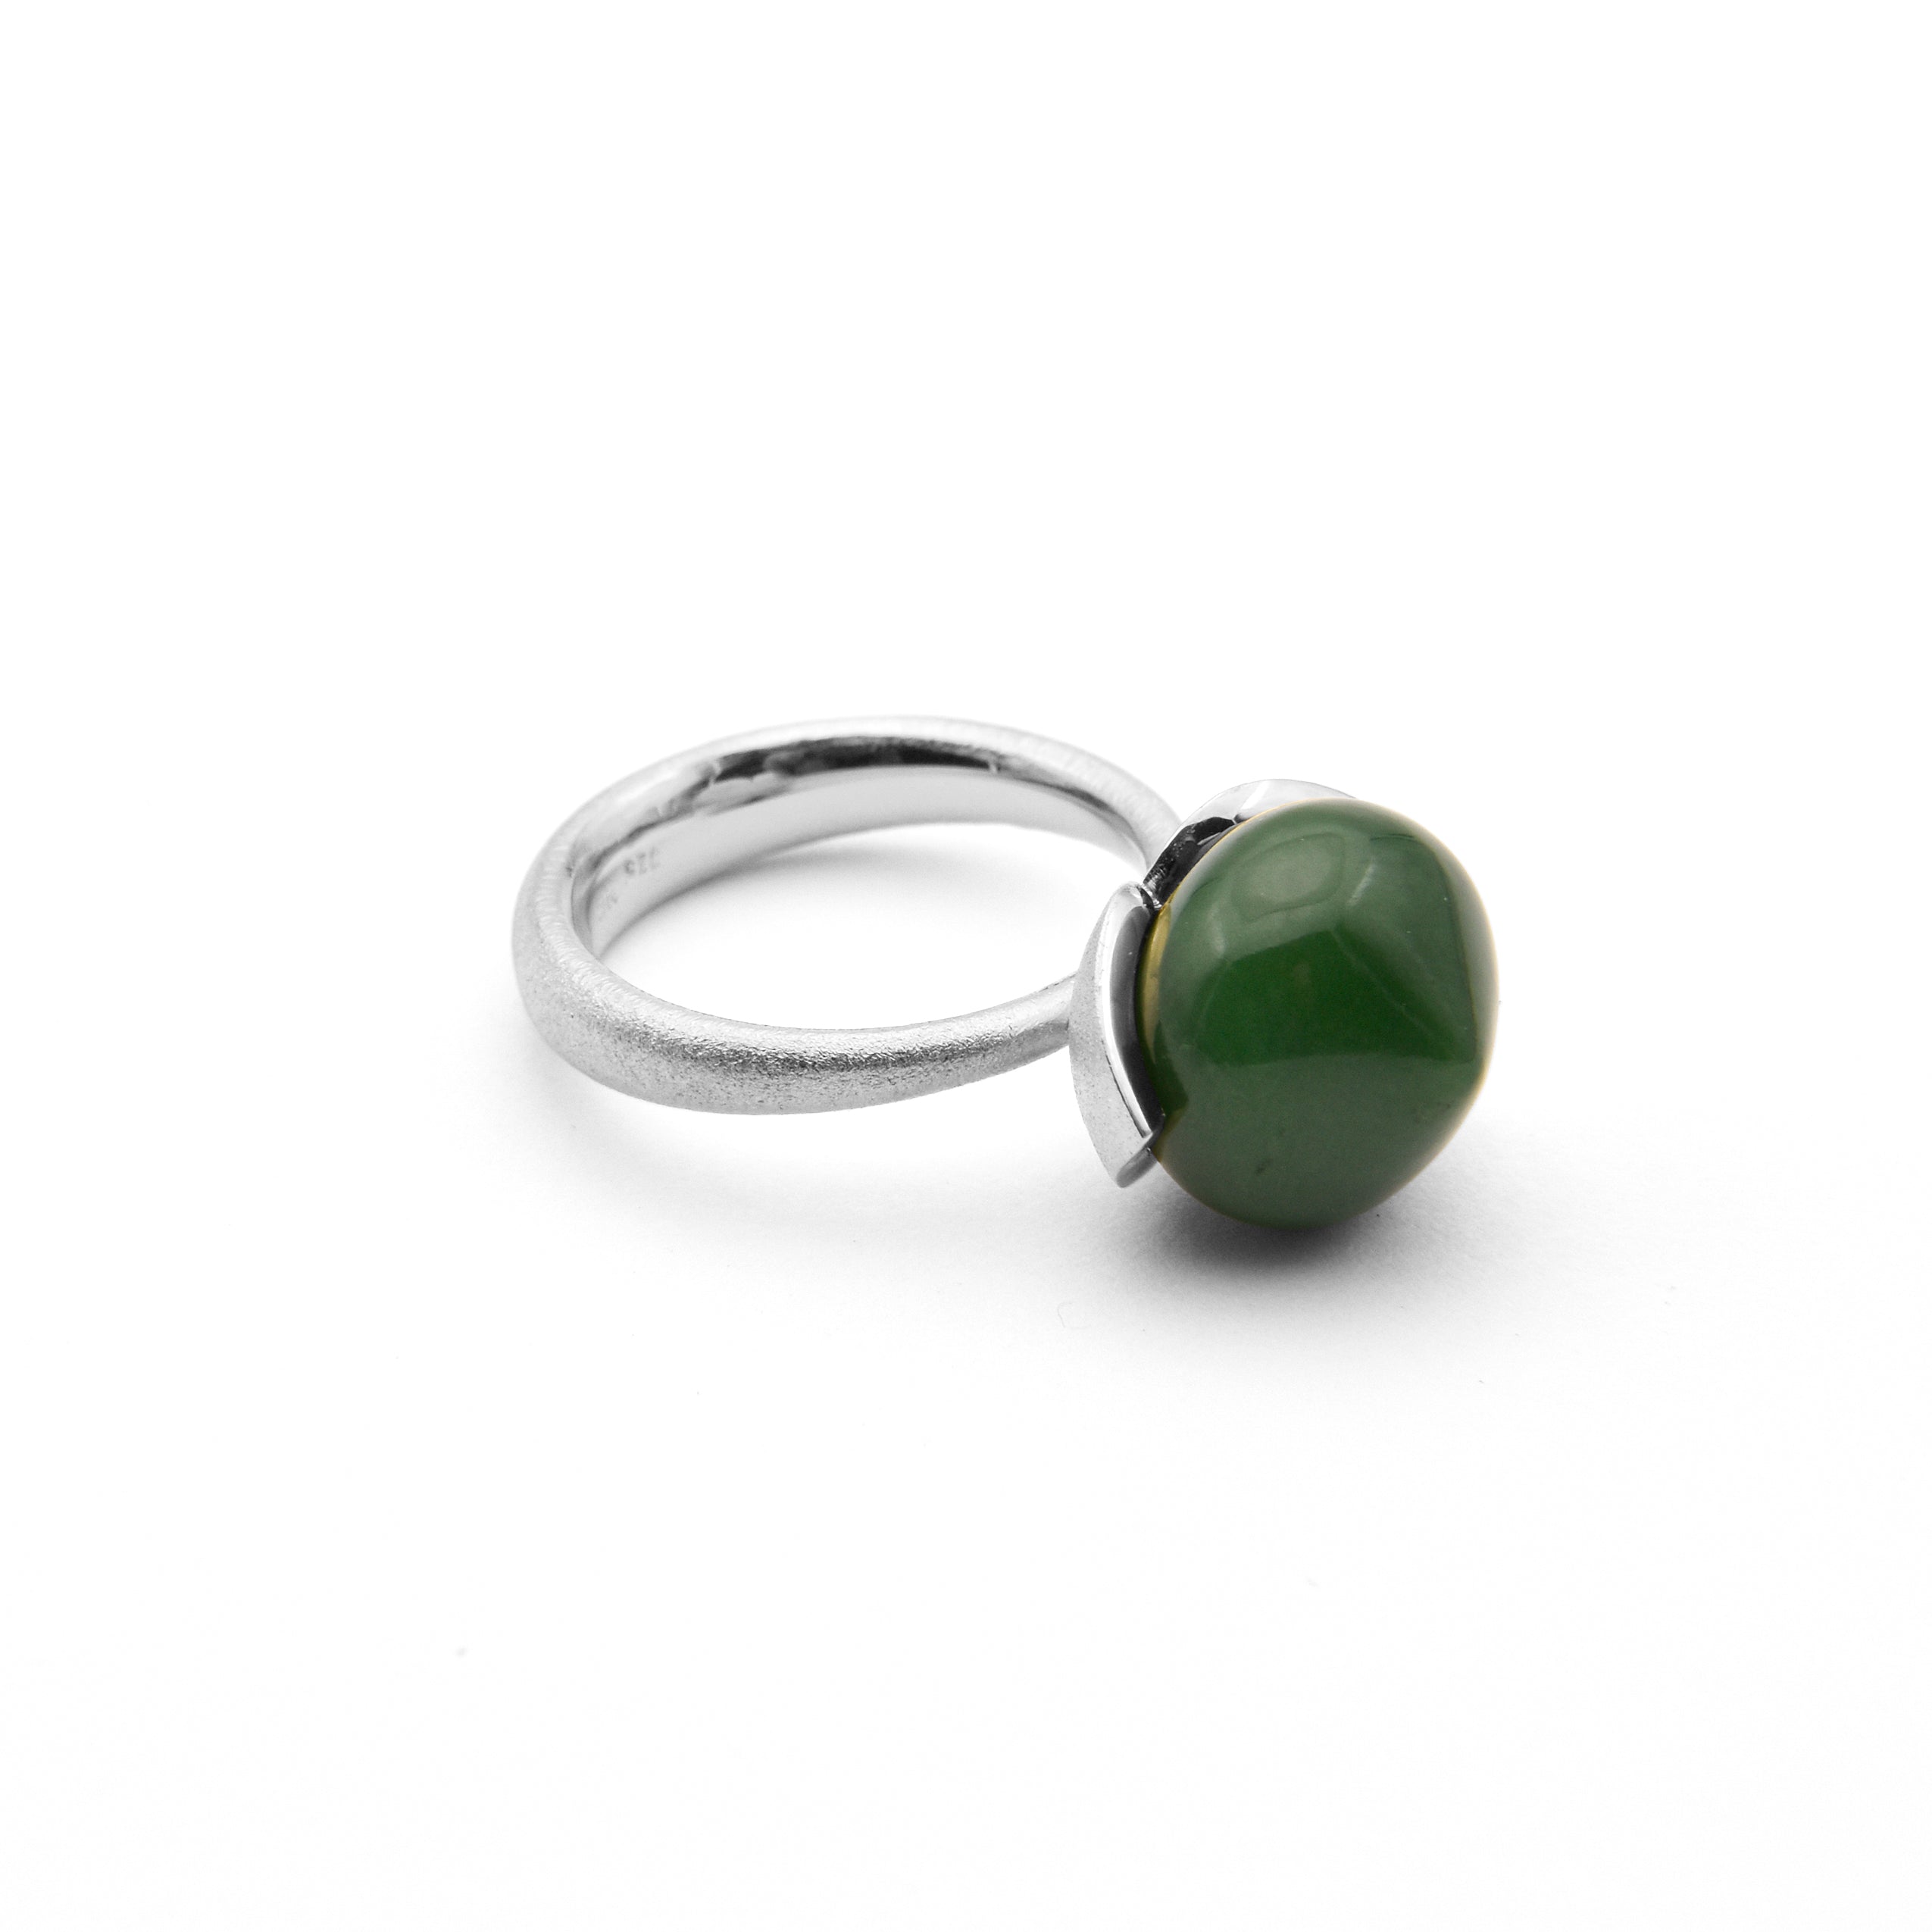 Dolce-ring "stor" med jade 925/-